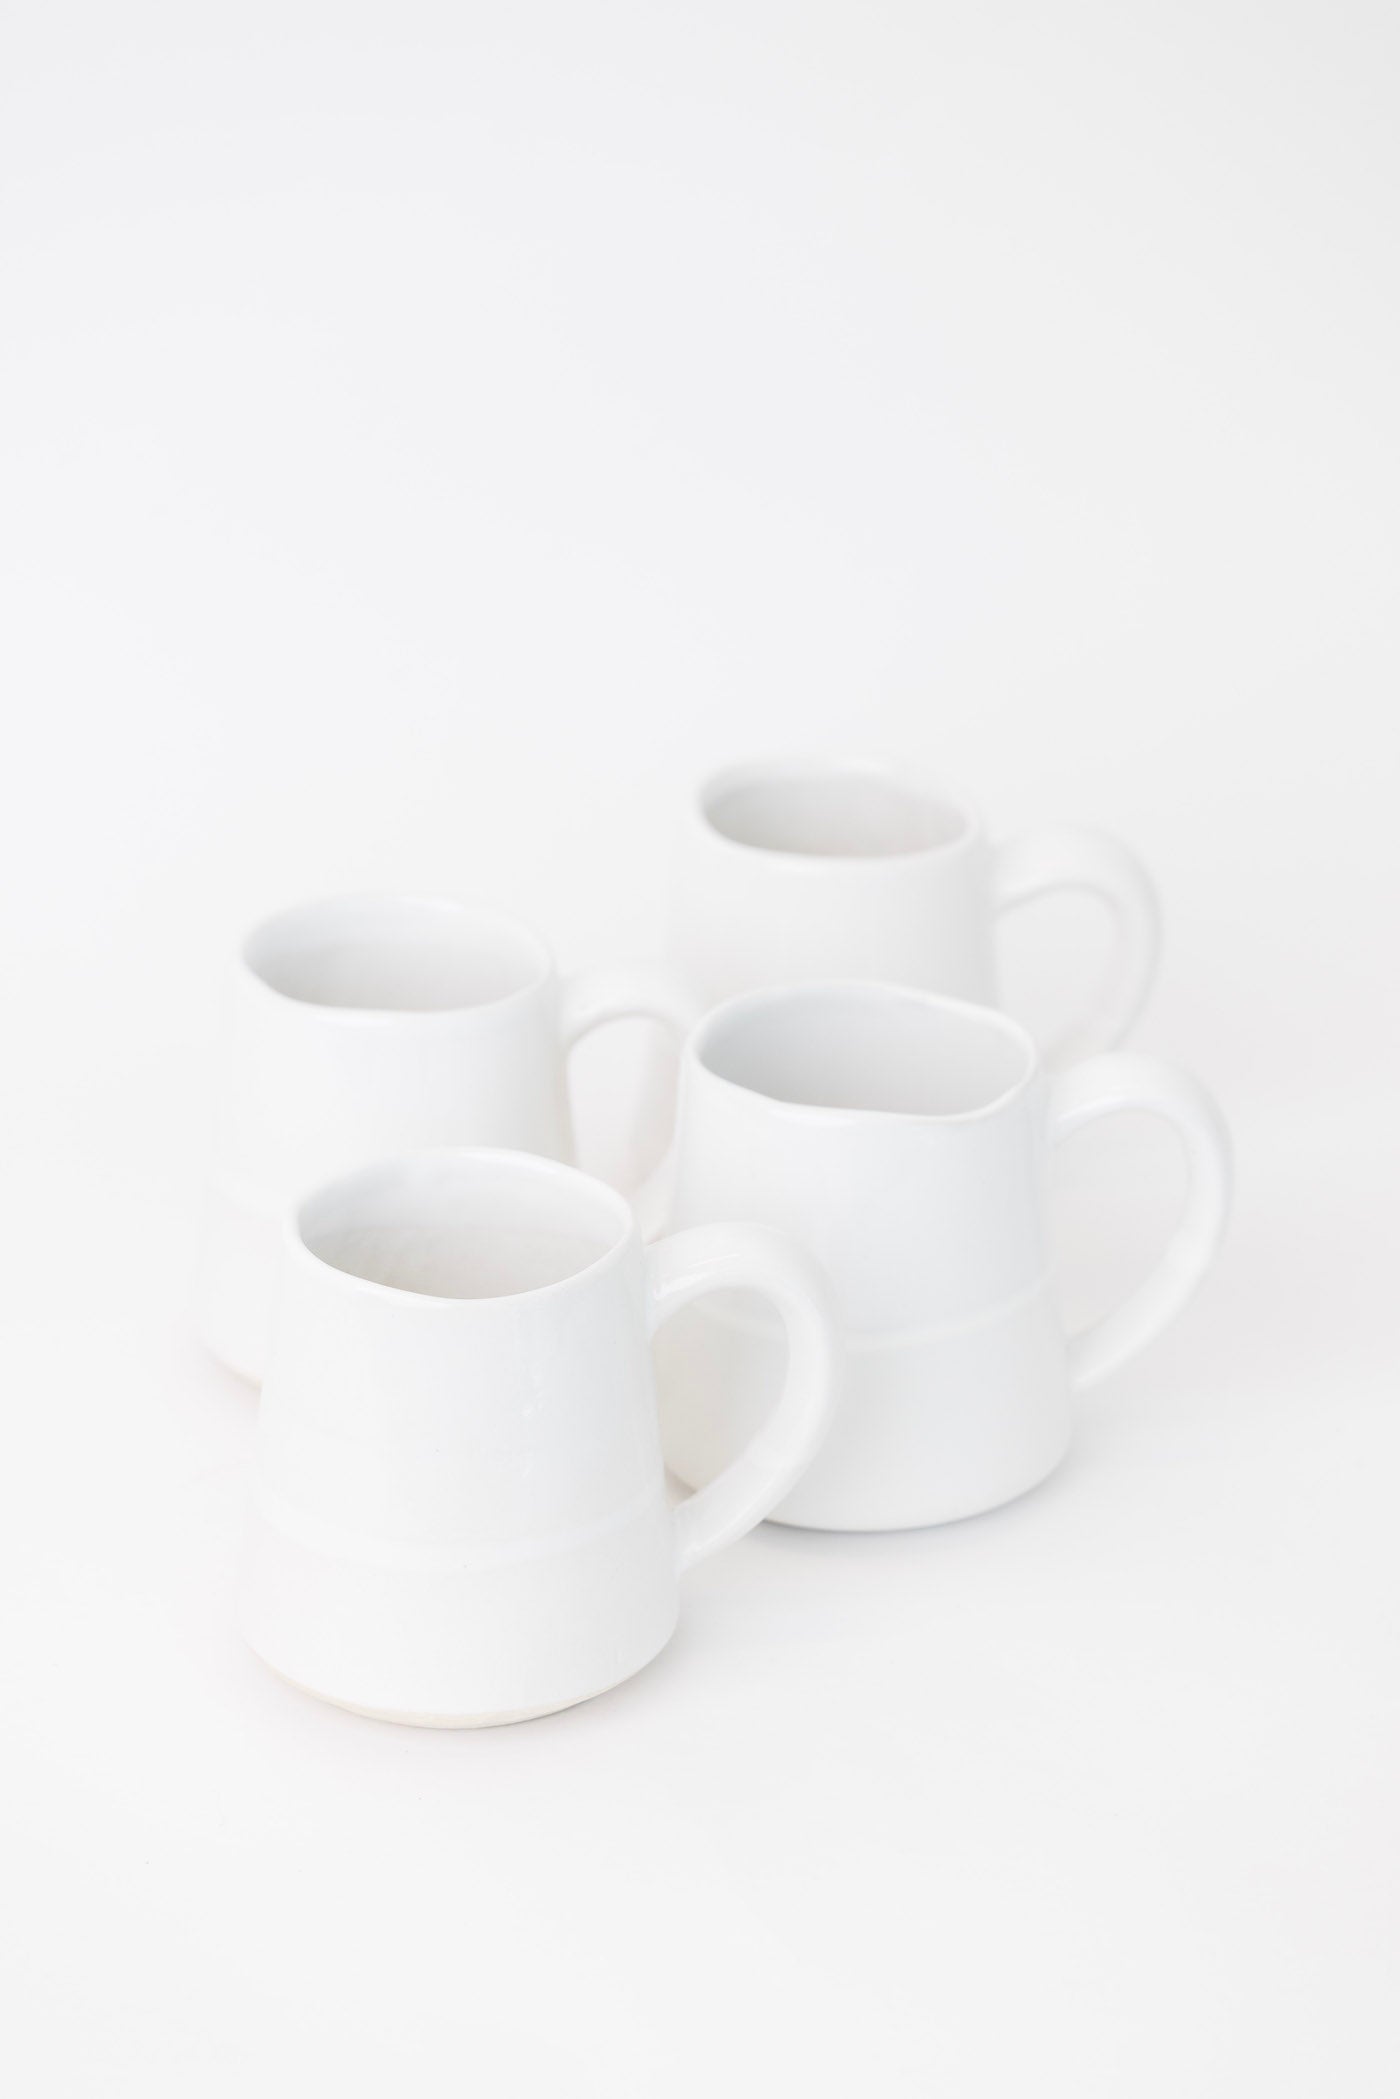 Sonnet Stoneware Coffee Mug - Matte White/ Glossy White - Set of 4